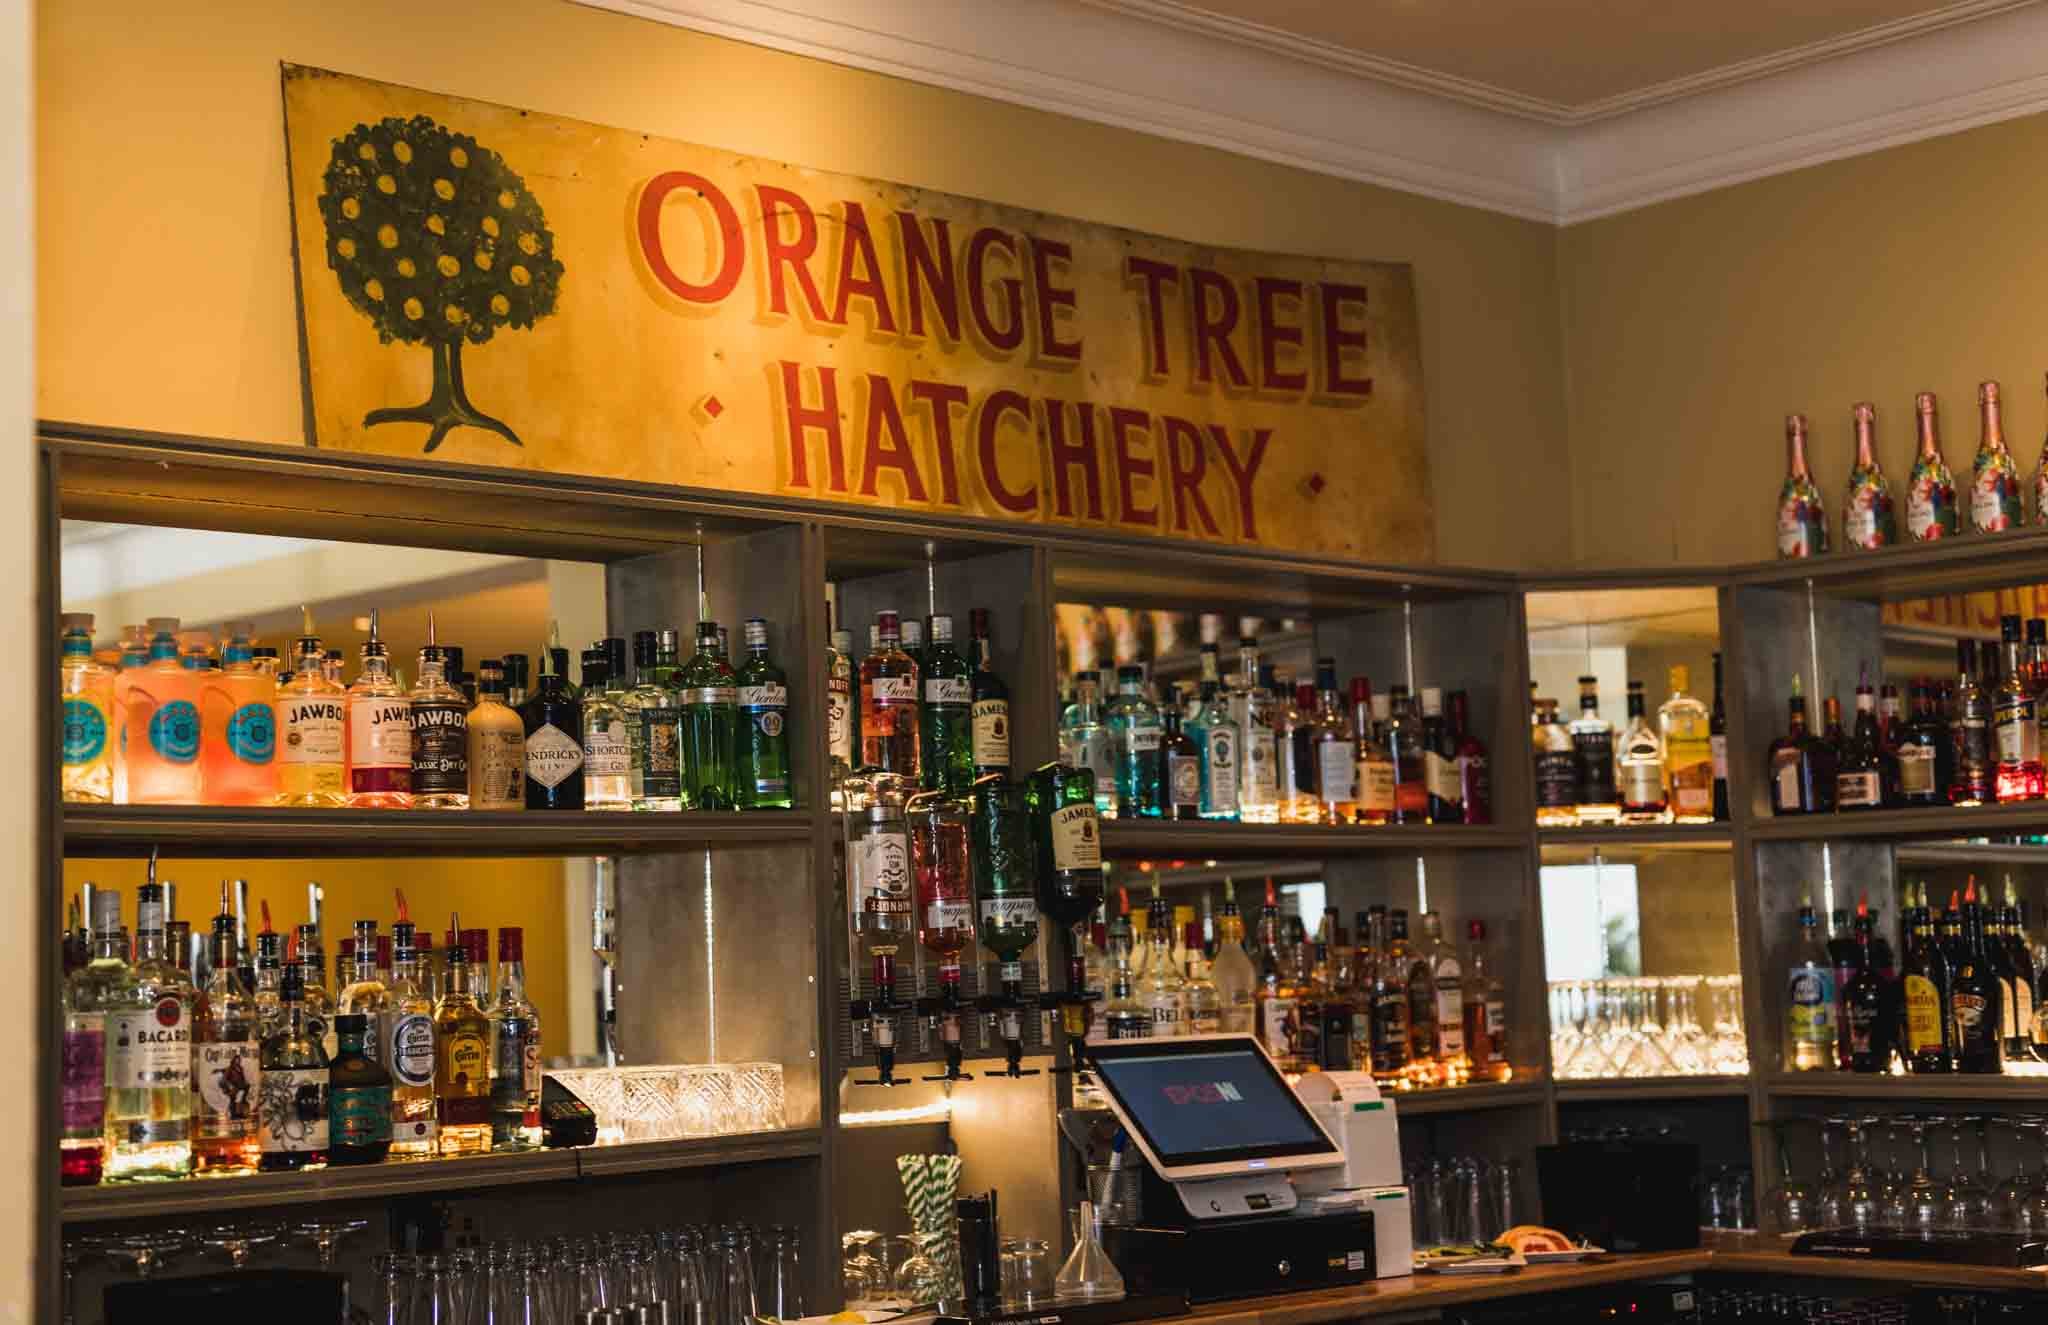  Orange tree house signage in bar in lounge 